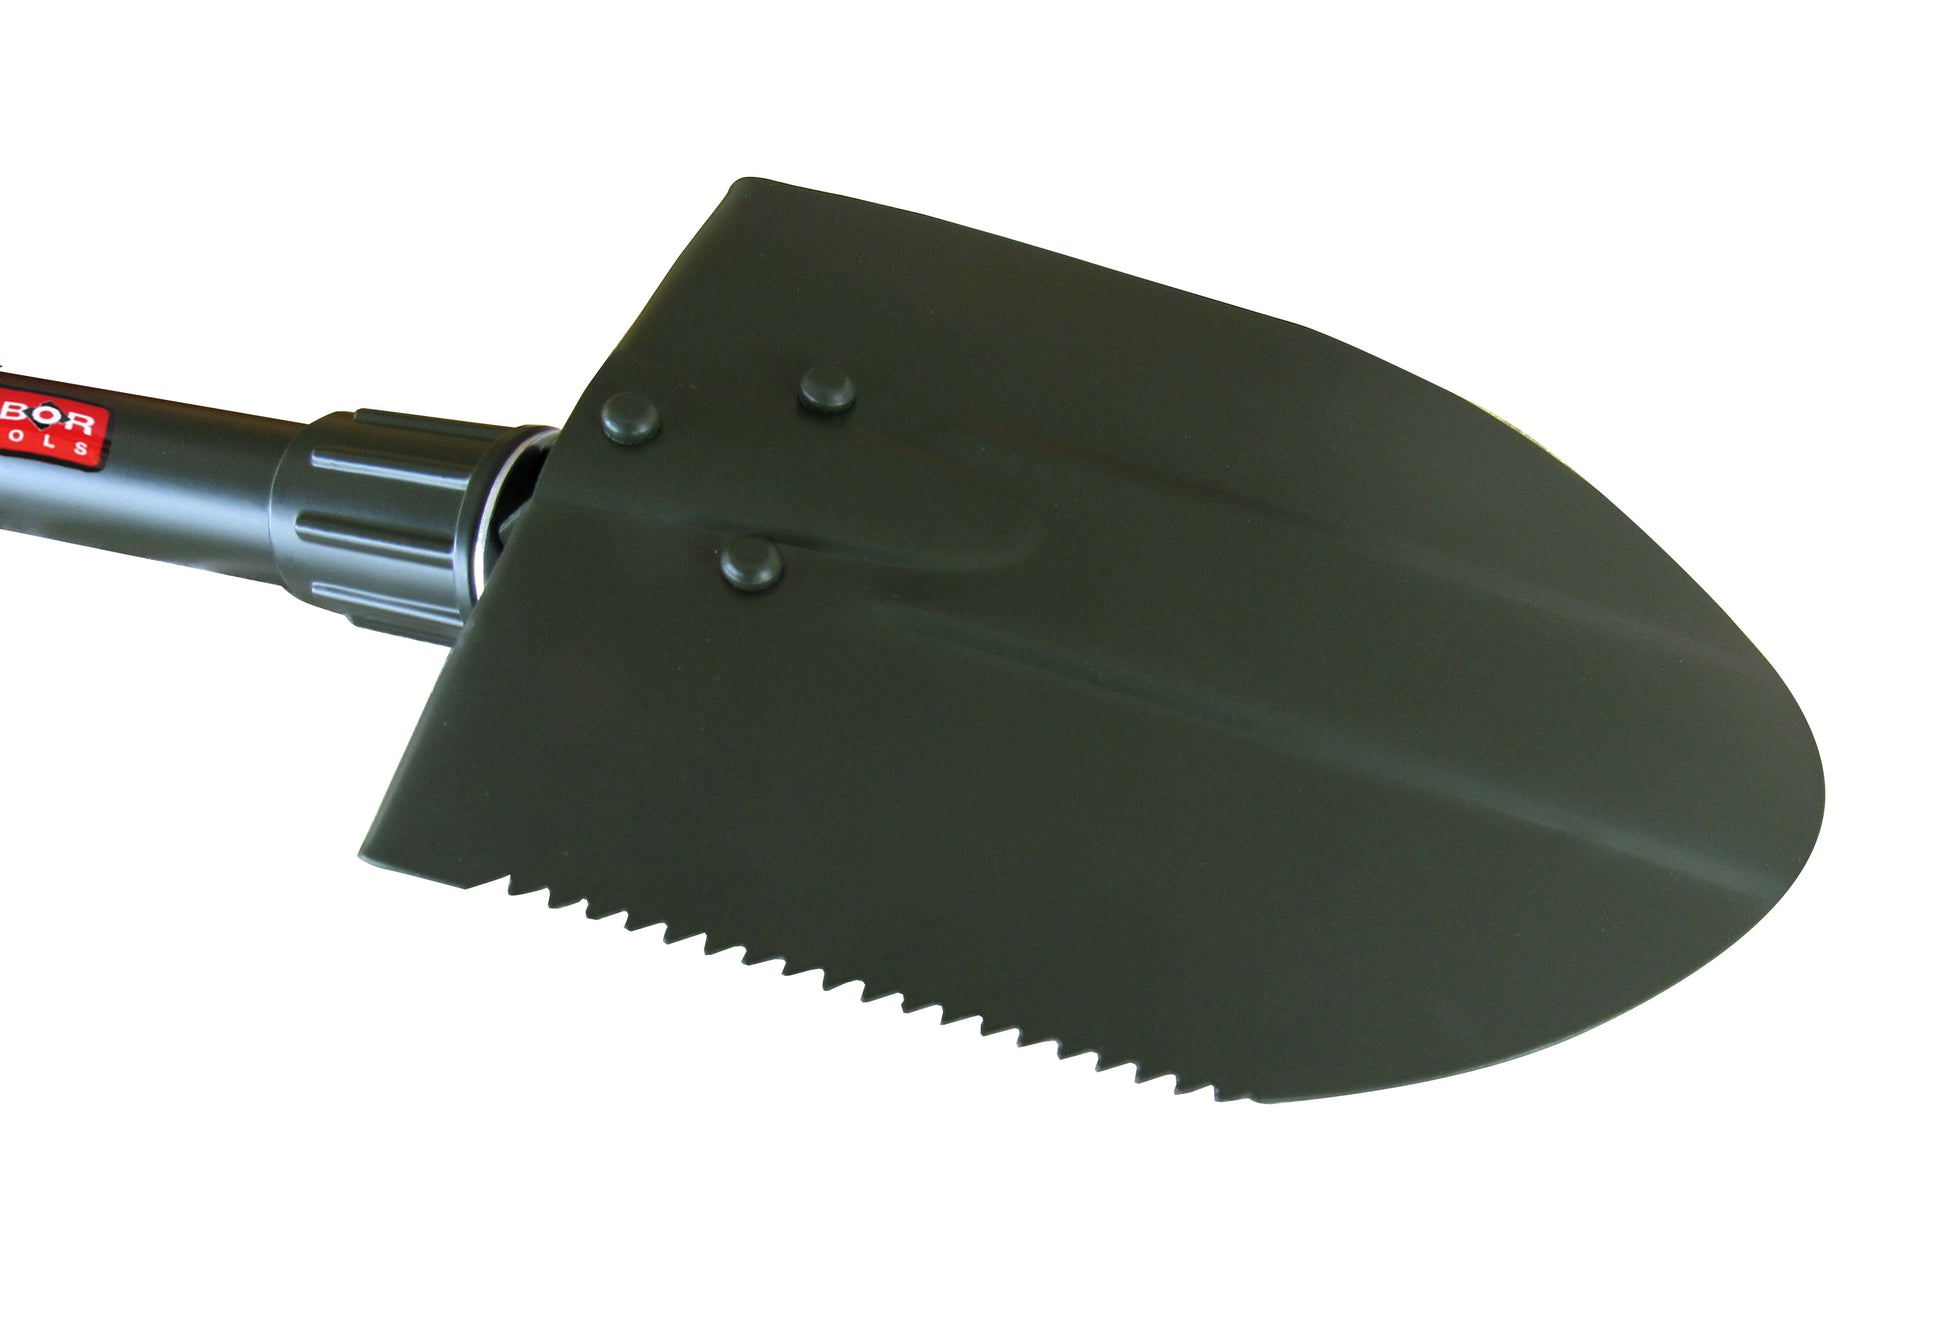 Tabor Tools Folding Shovel